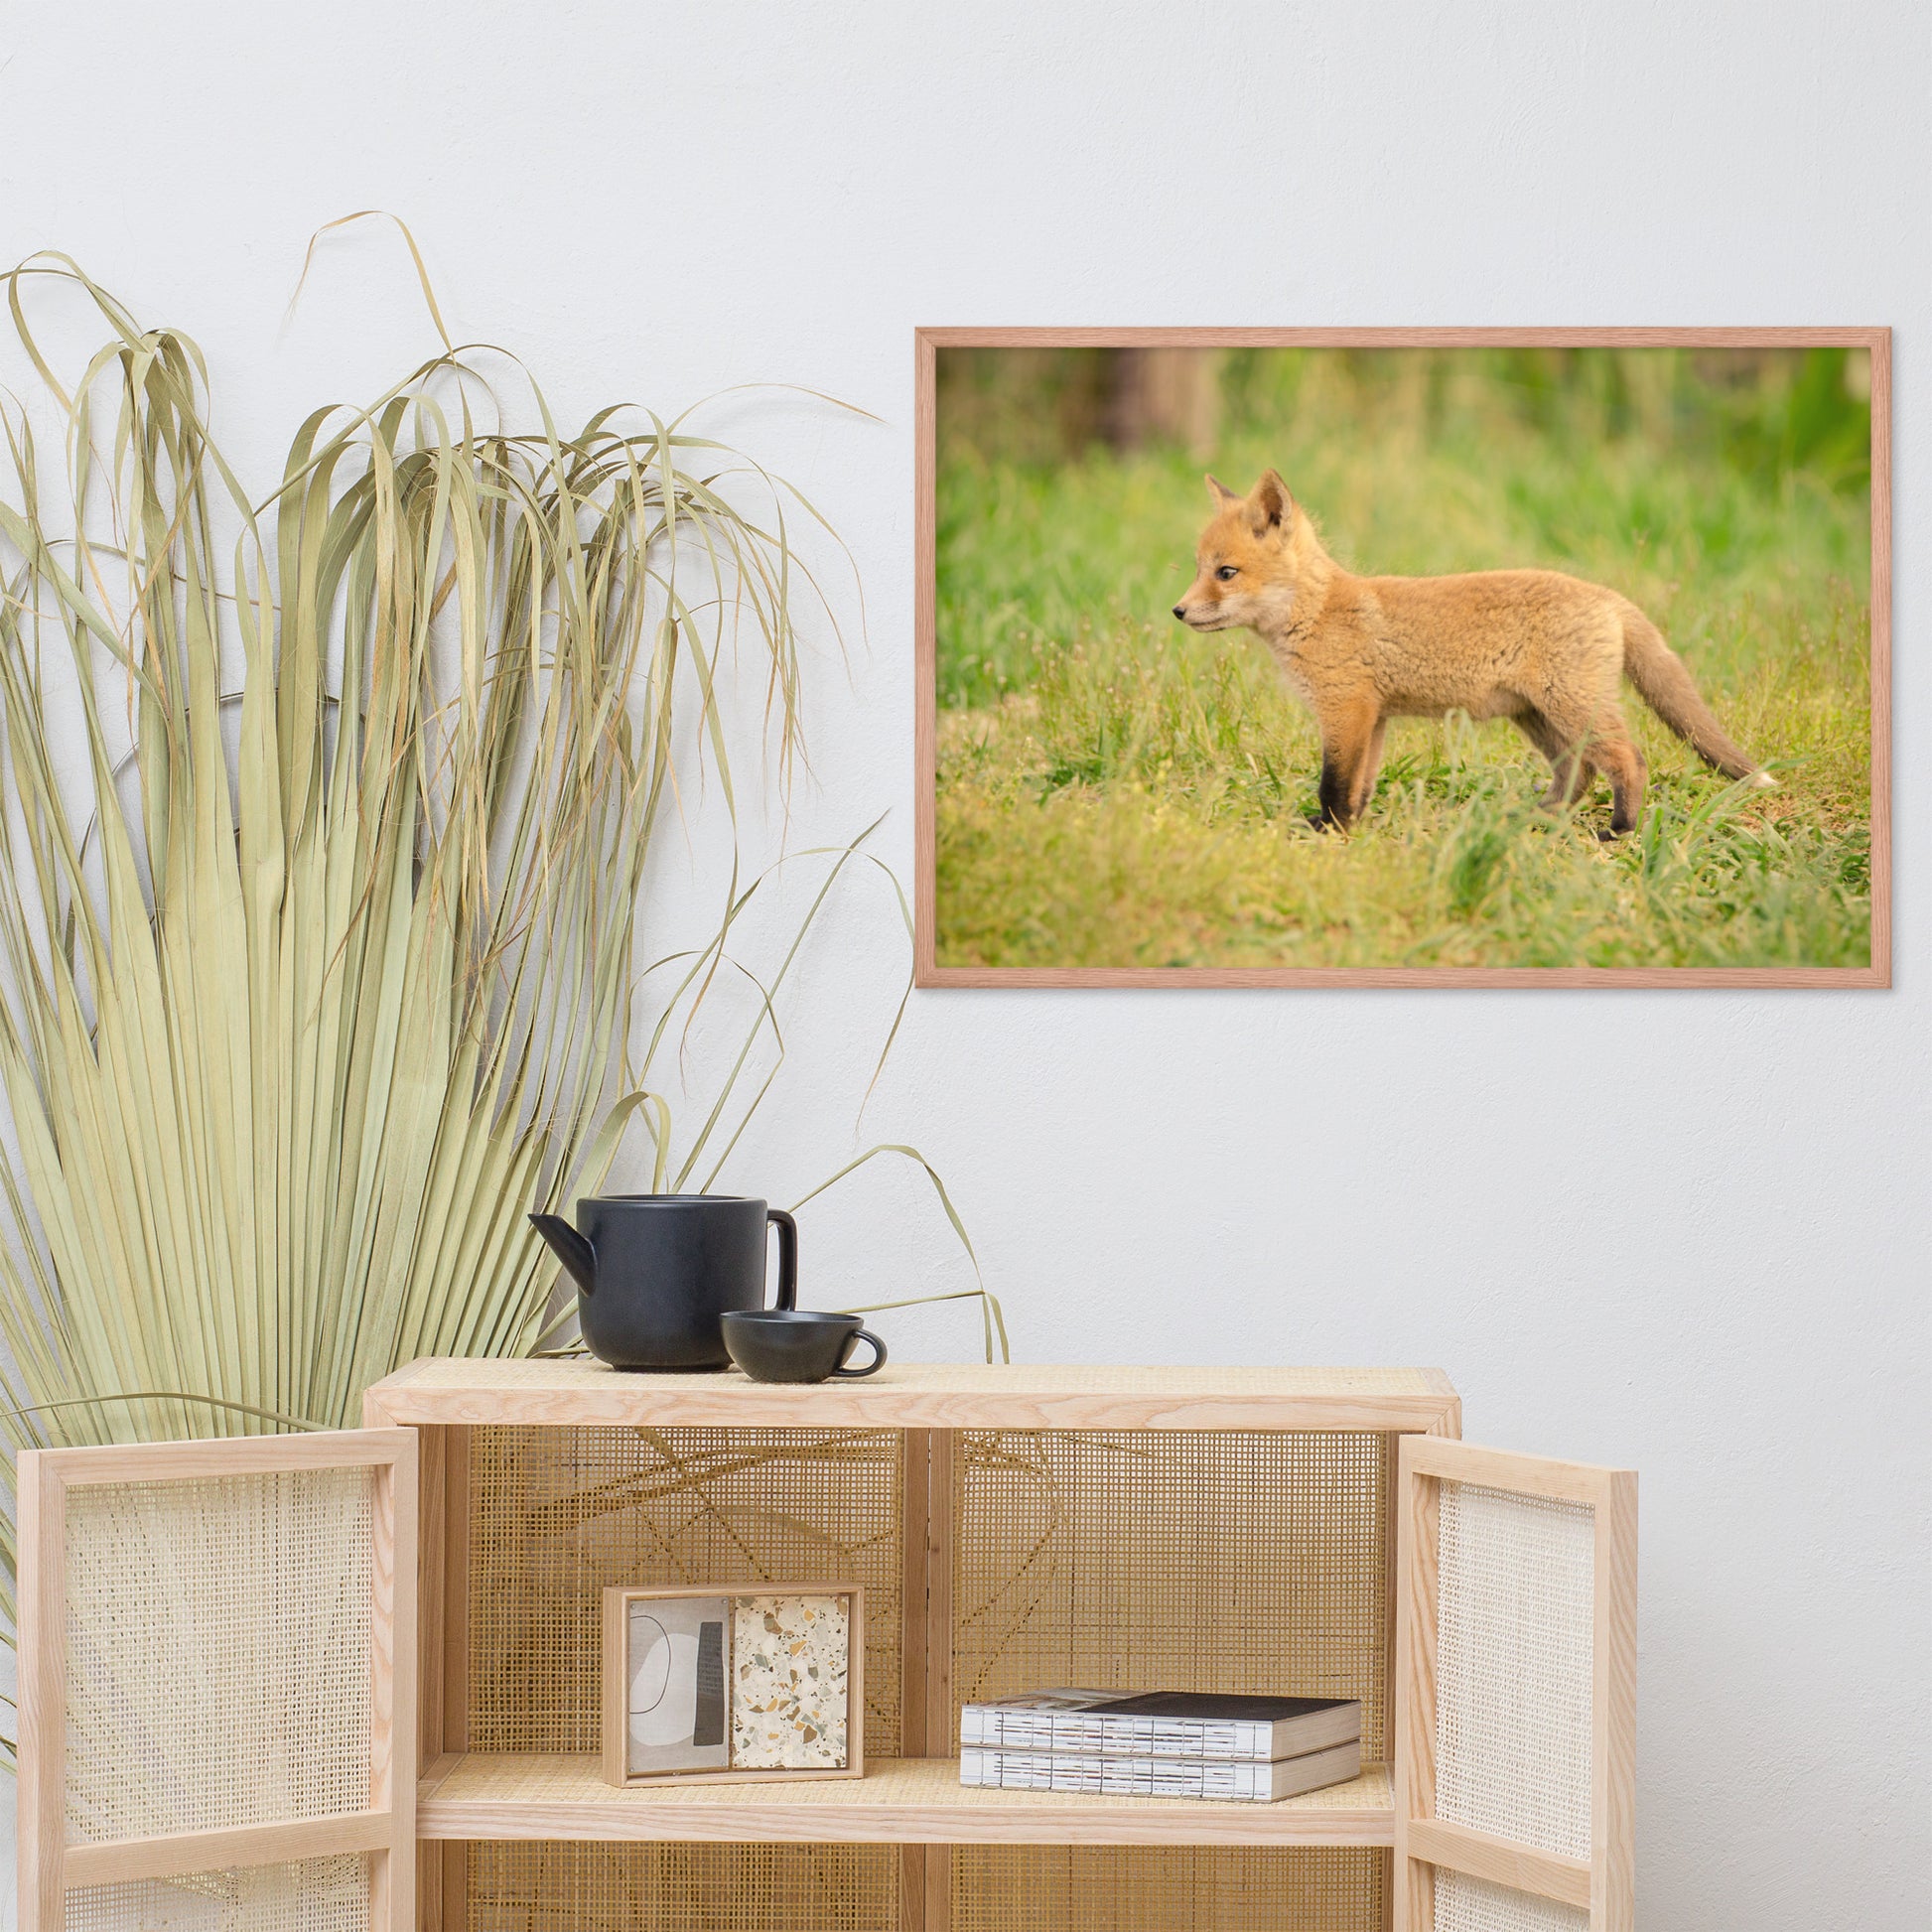 Nursery Room Art: Baby Fox Pup In Meadow/ Animal / Wildlife / Nature Photographic Artwork - Framed Artwork - Wall Decor